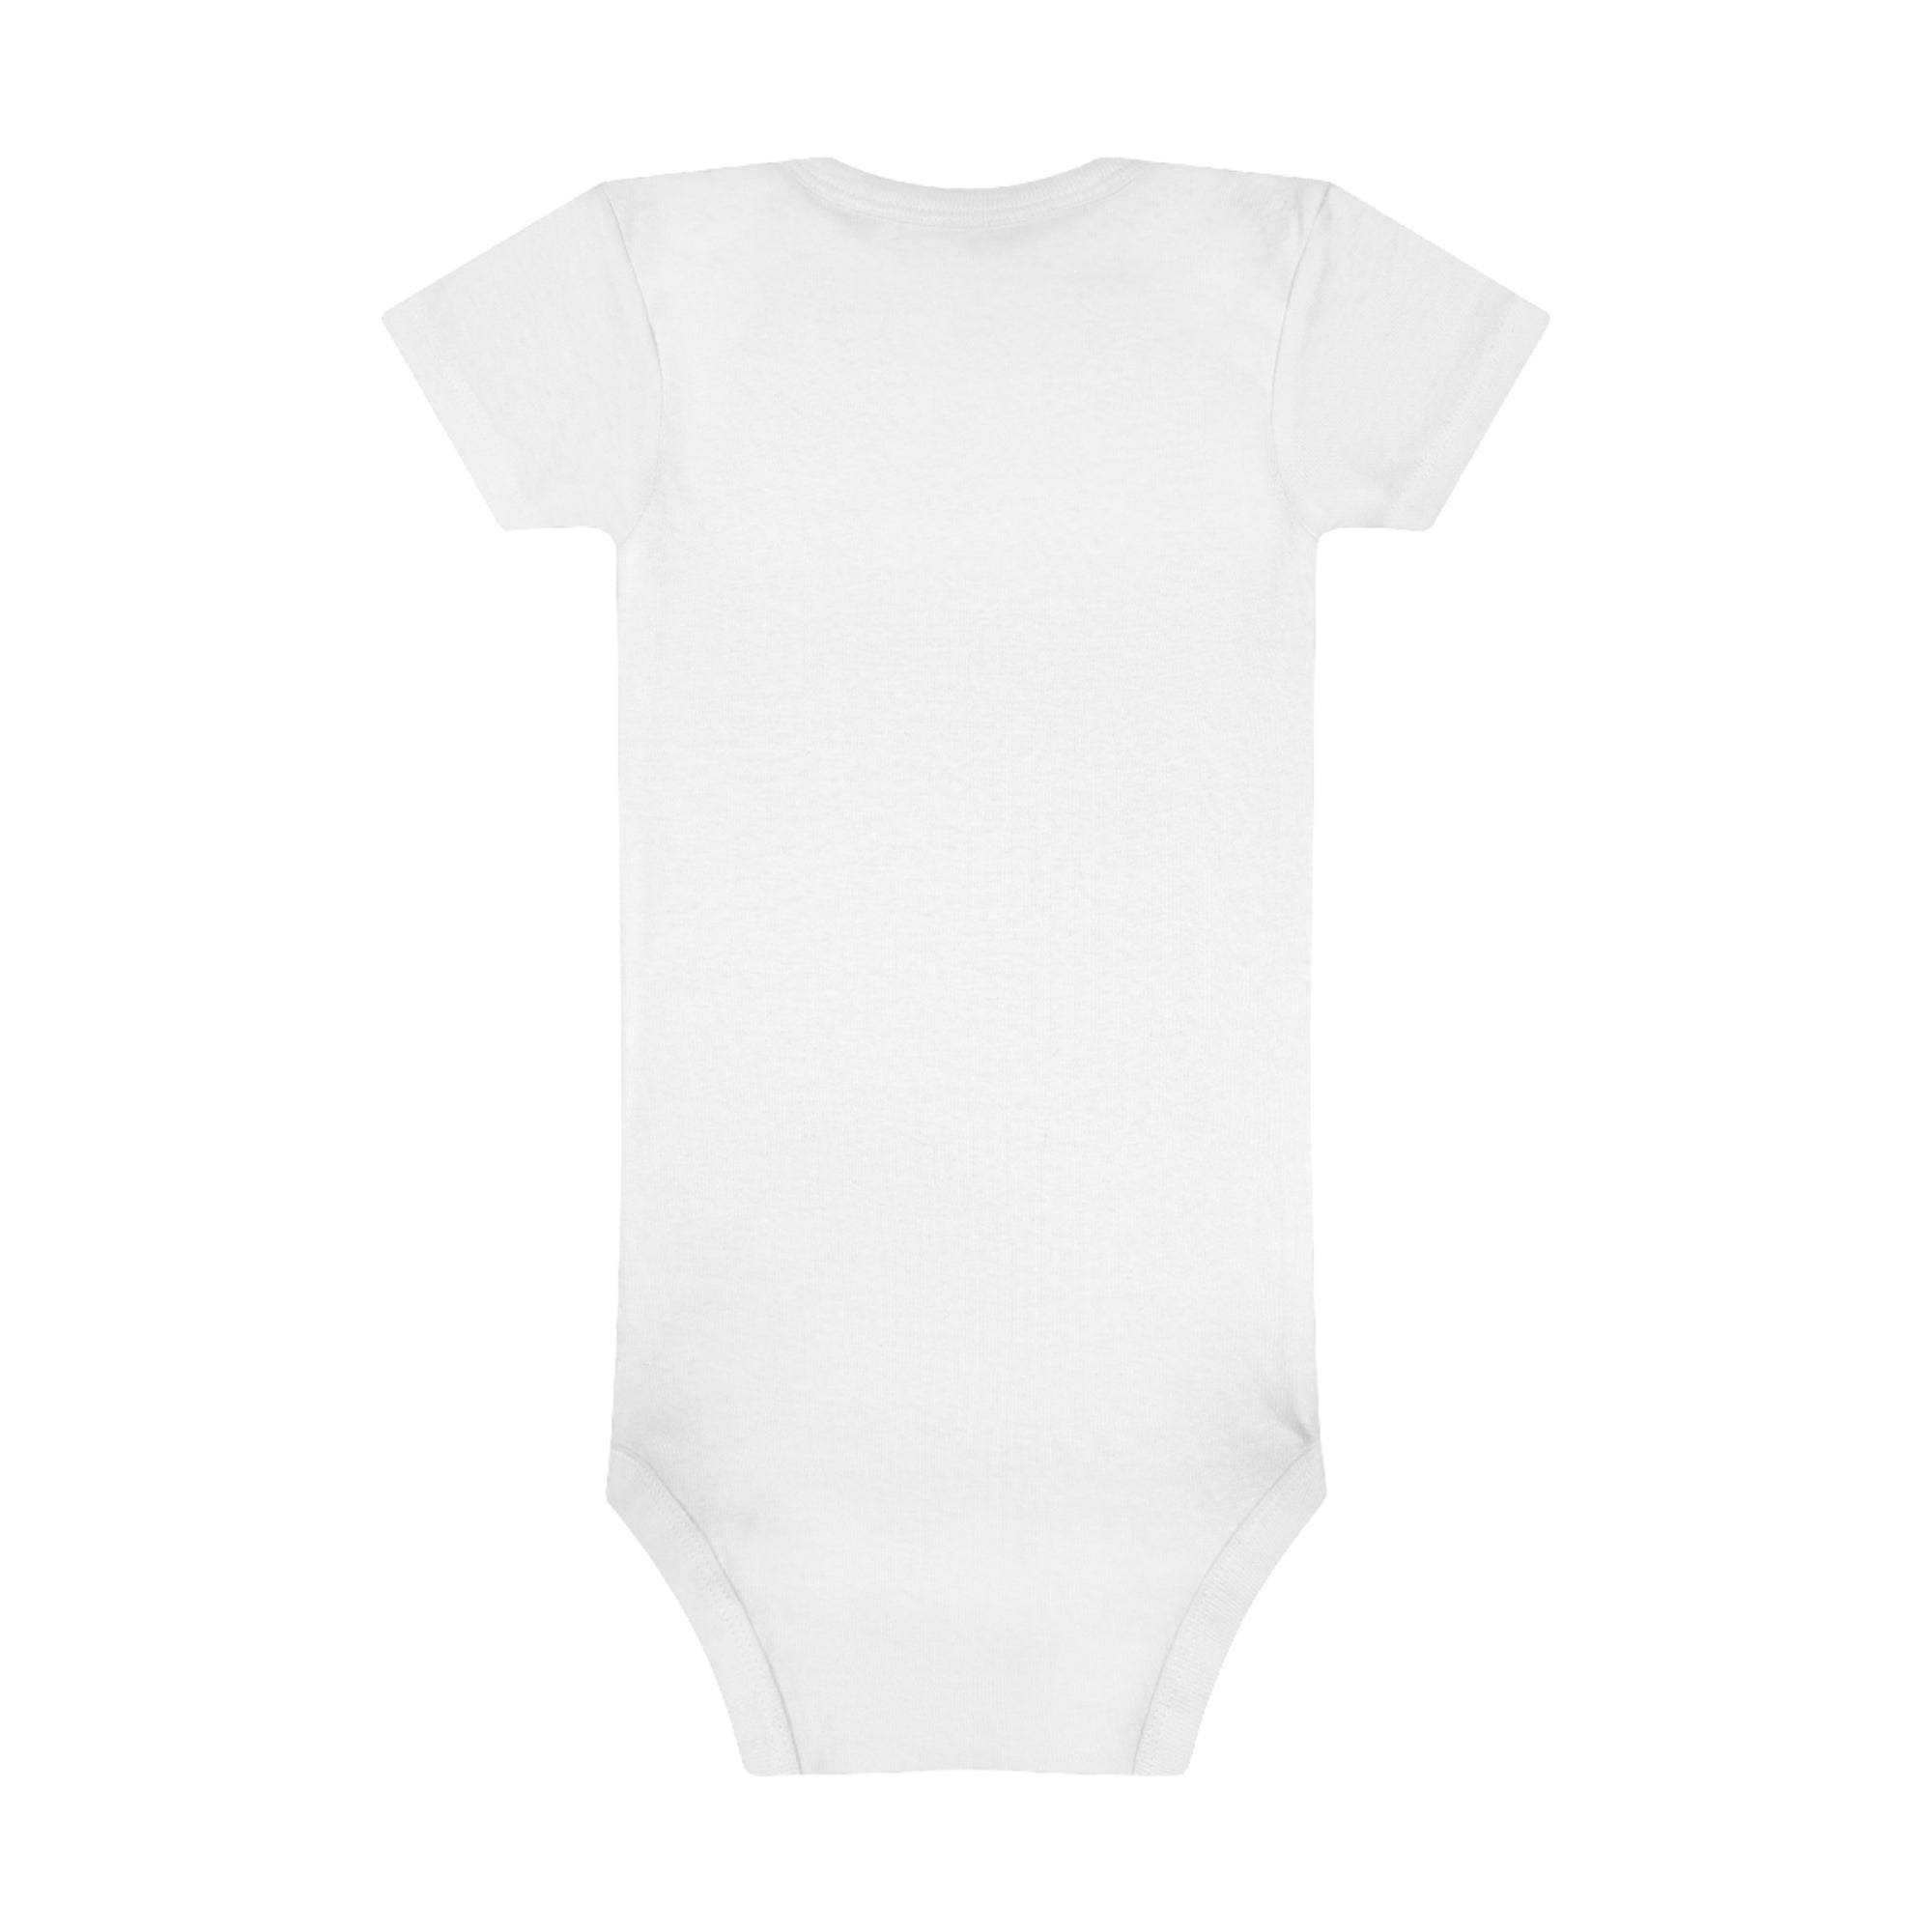 Baby Short Sleeve Onesie® - Dream Big